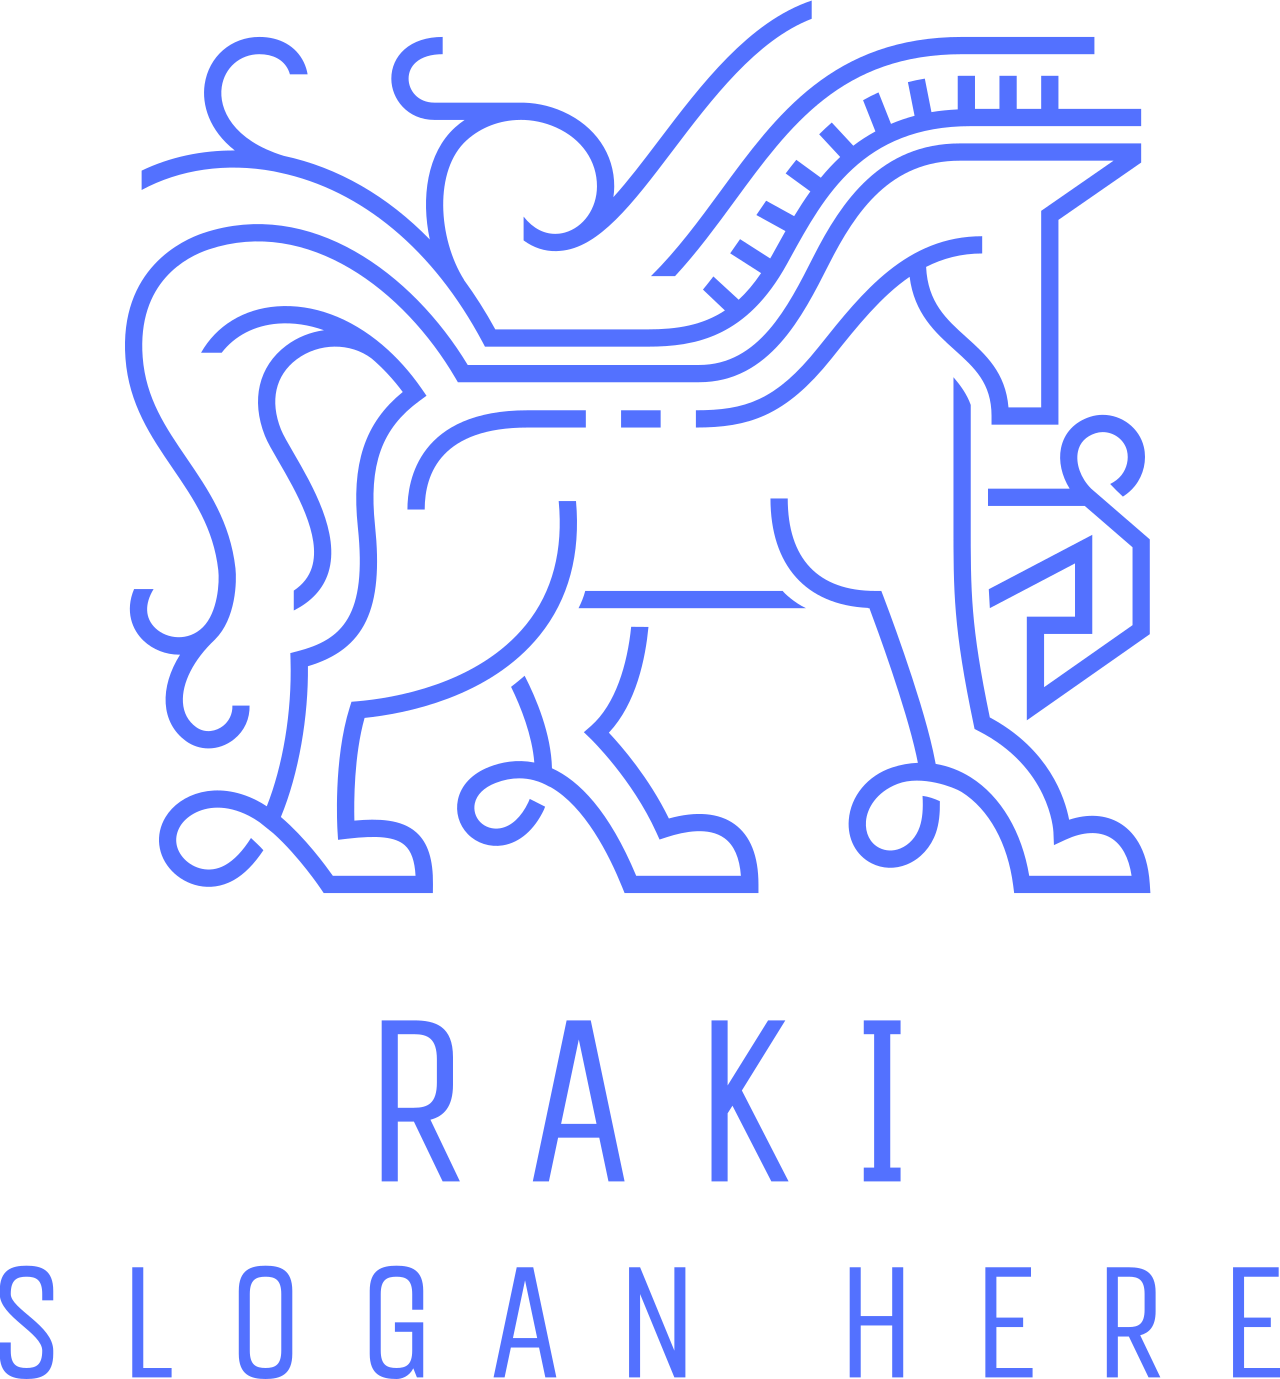 RAKI's logo